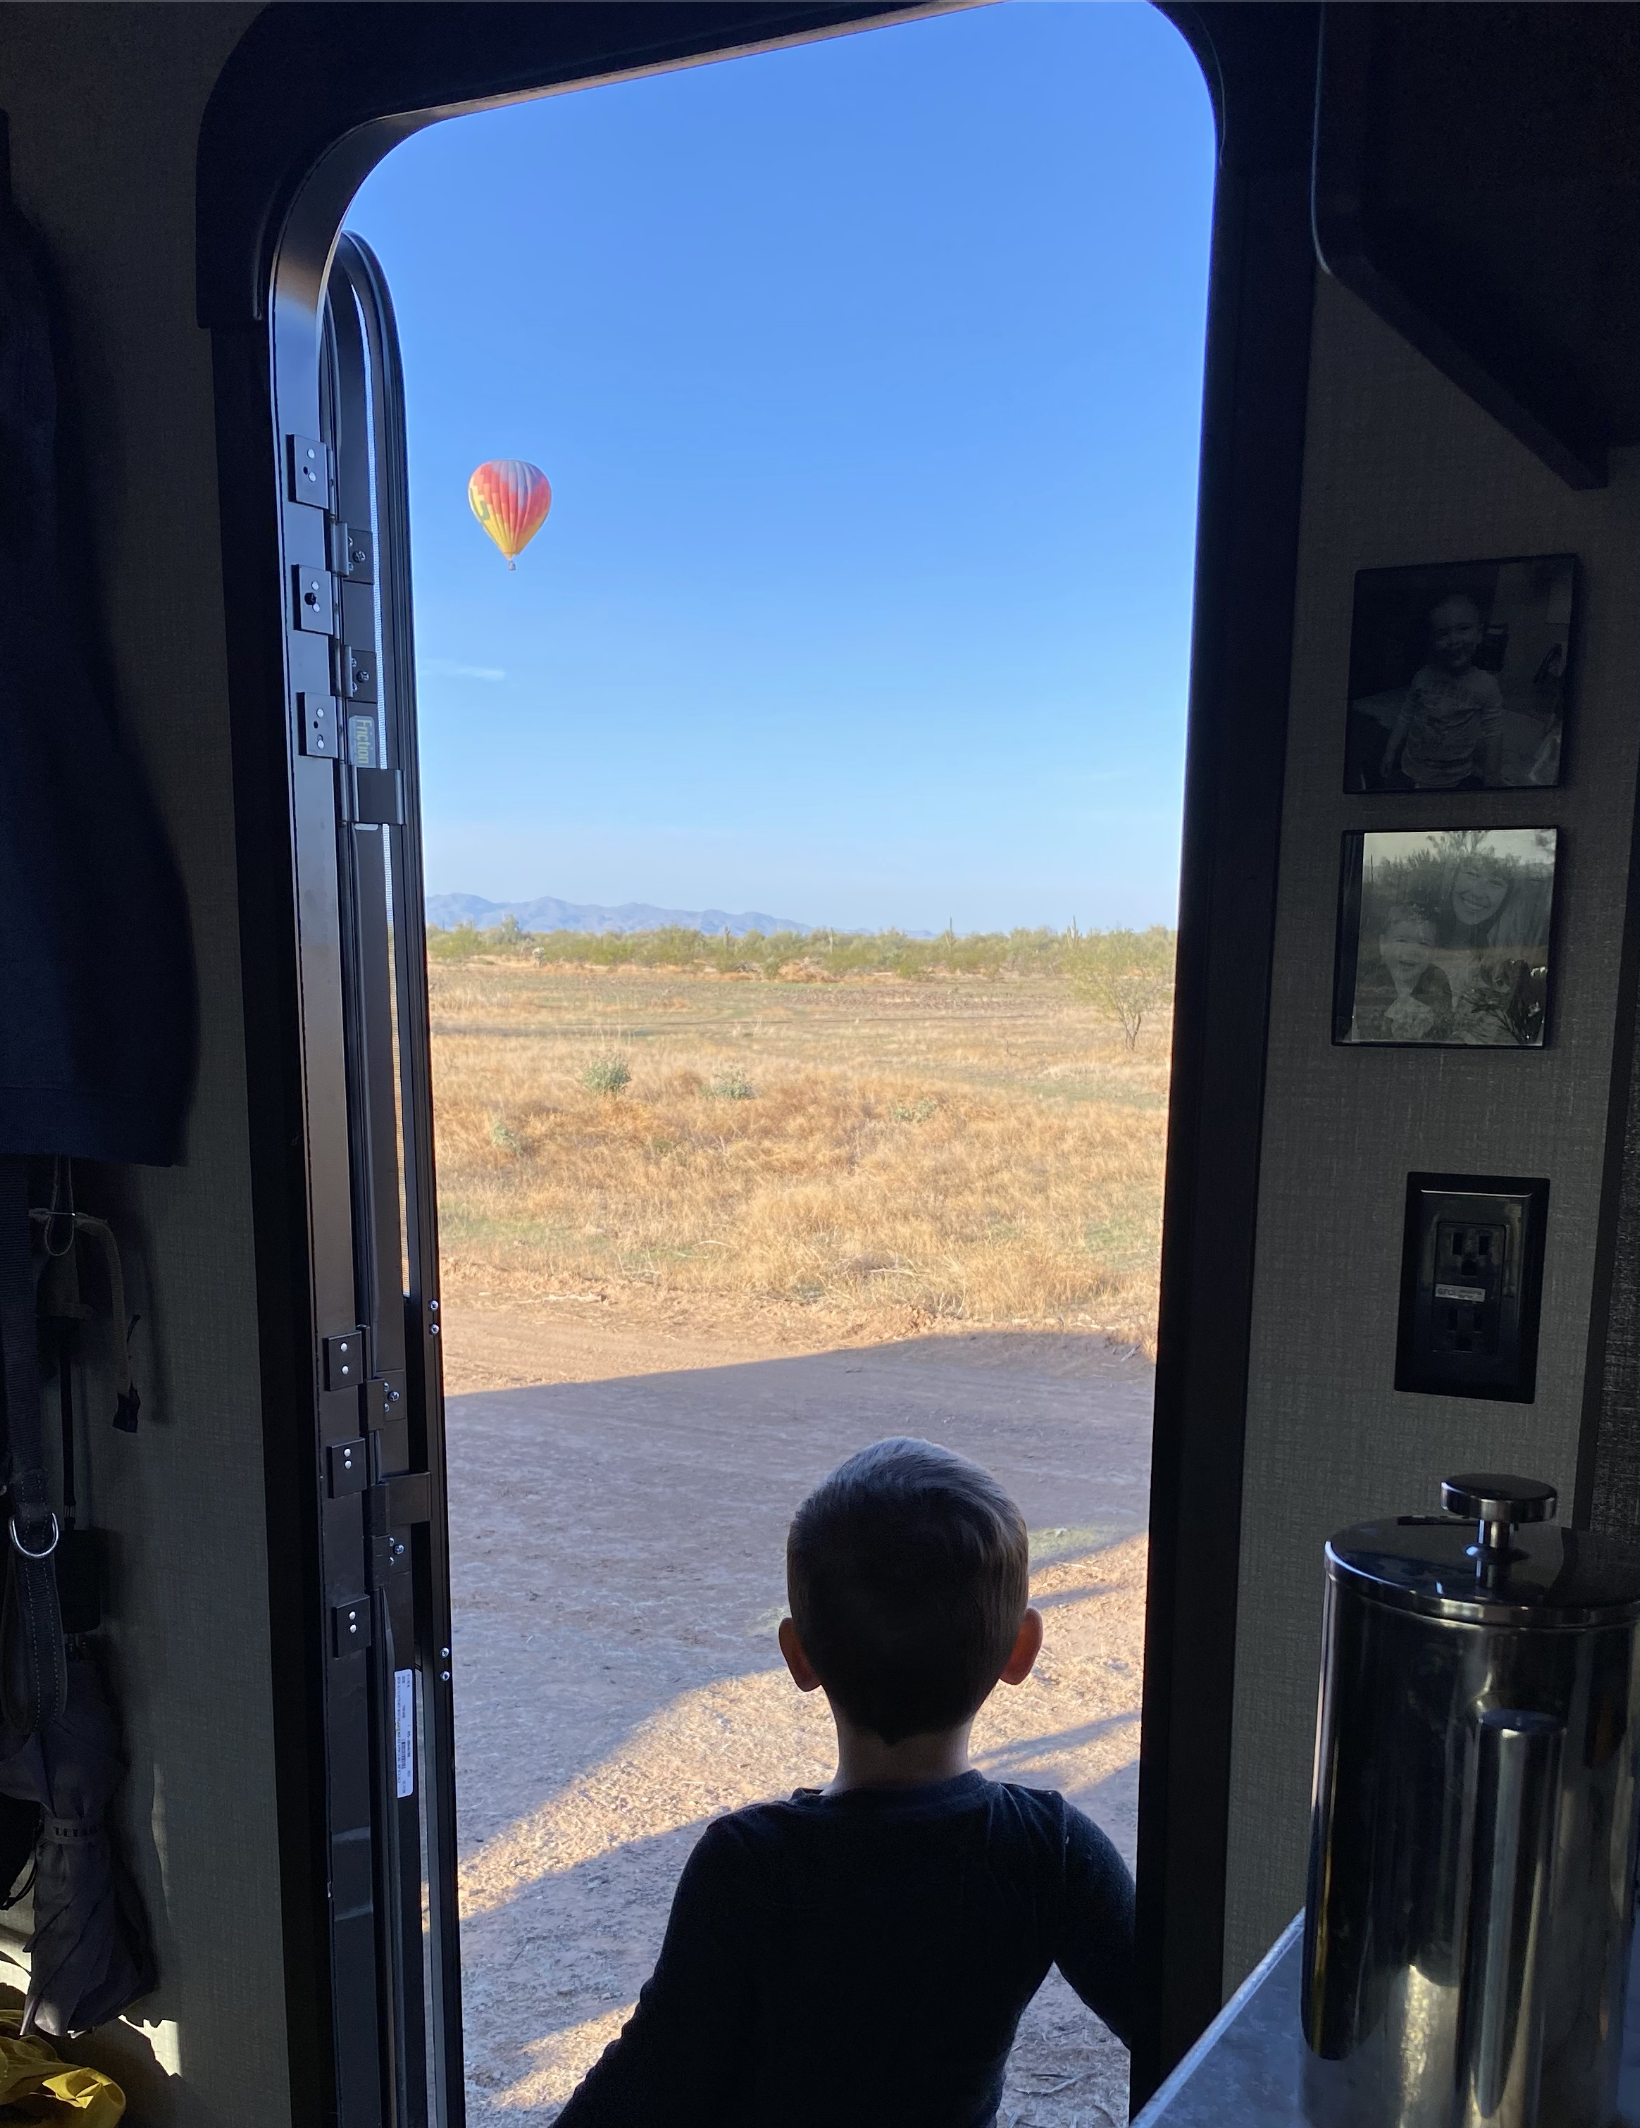 Sunsets, Balloons, Stunt Planes